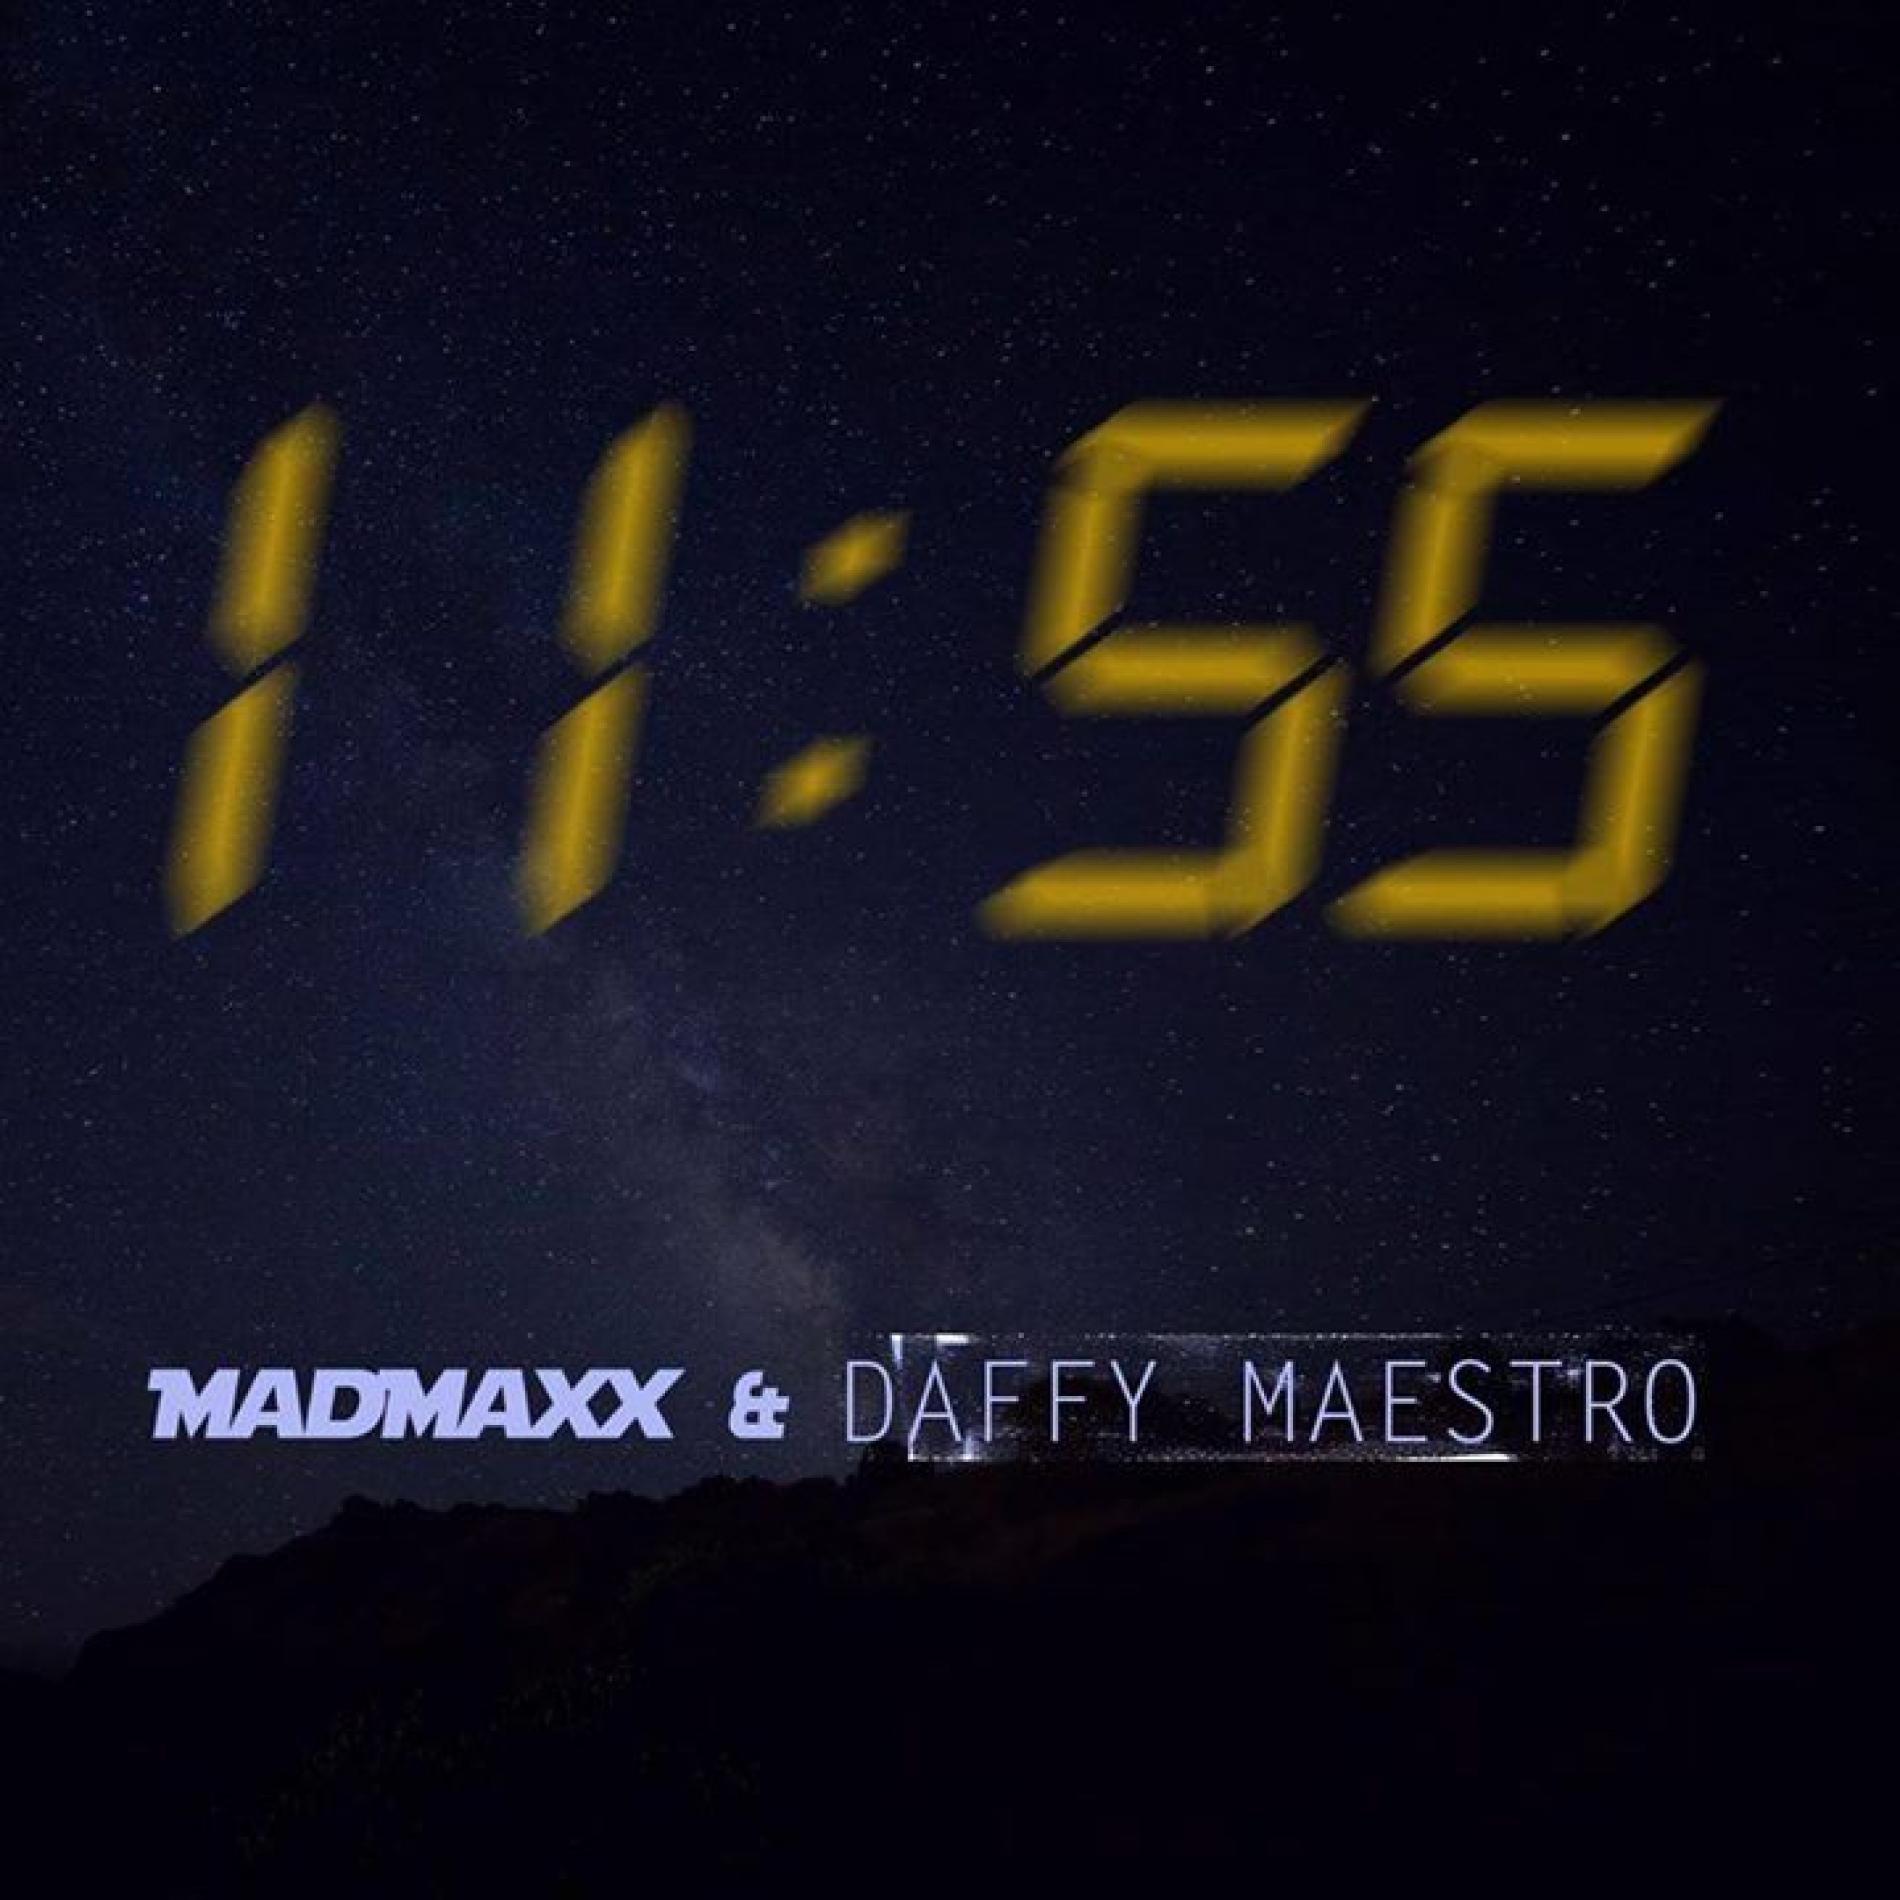 Madmaxx & Daffy Maestro – 11:55